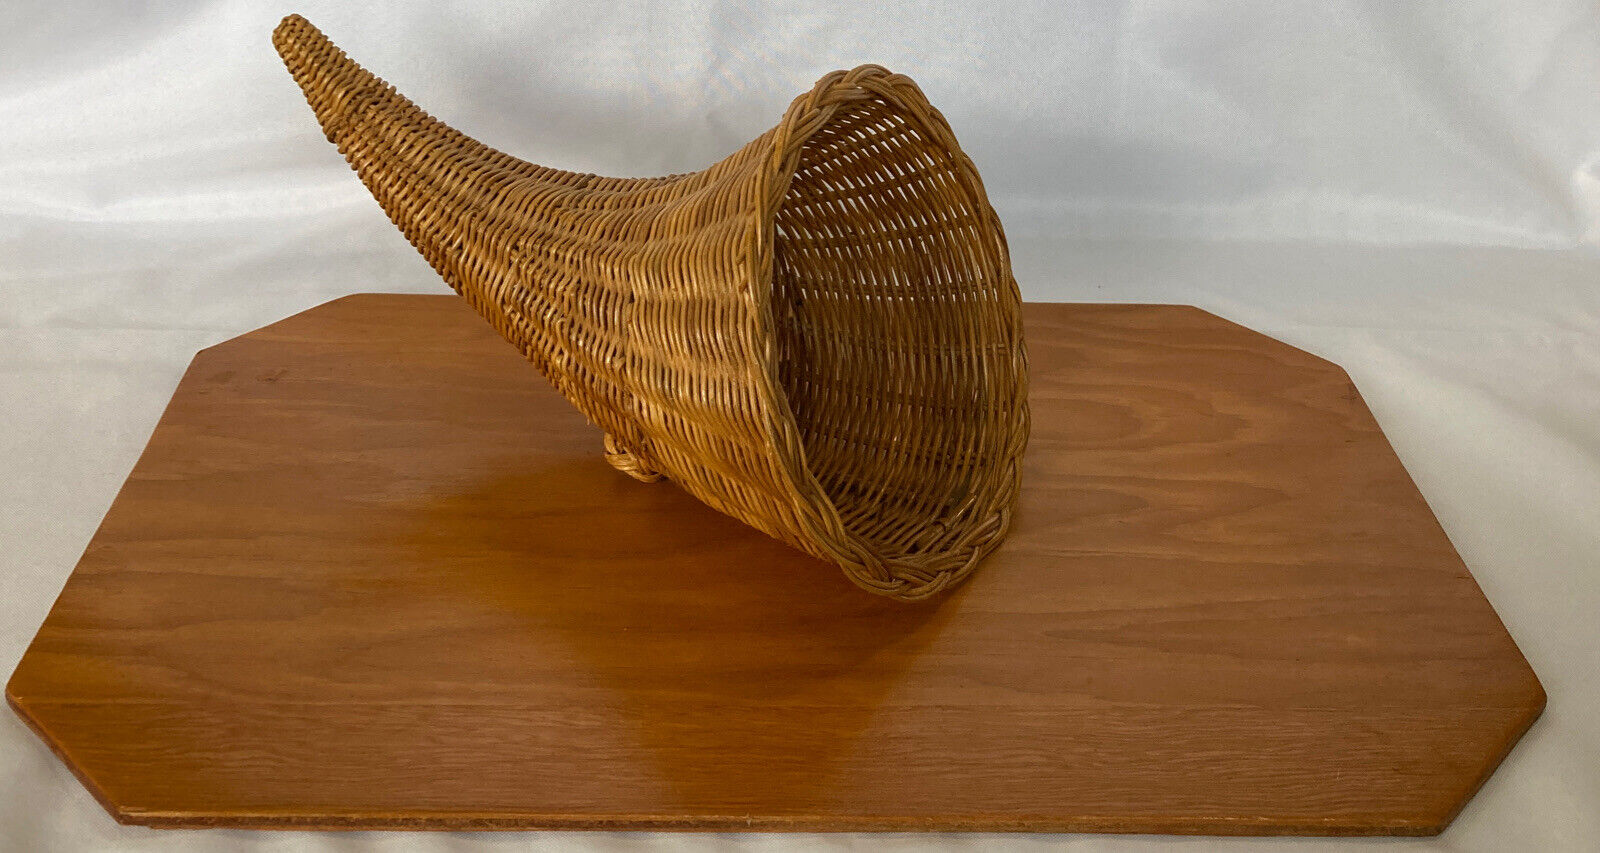 Thanksgiving Cornucopia Horn Of Plenty Basket on Wood Autumn Decor